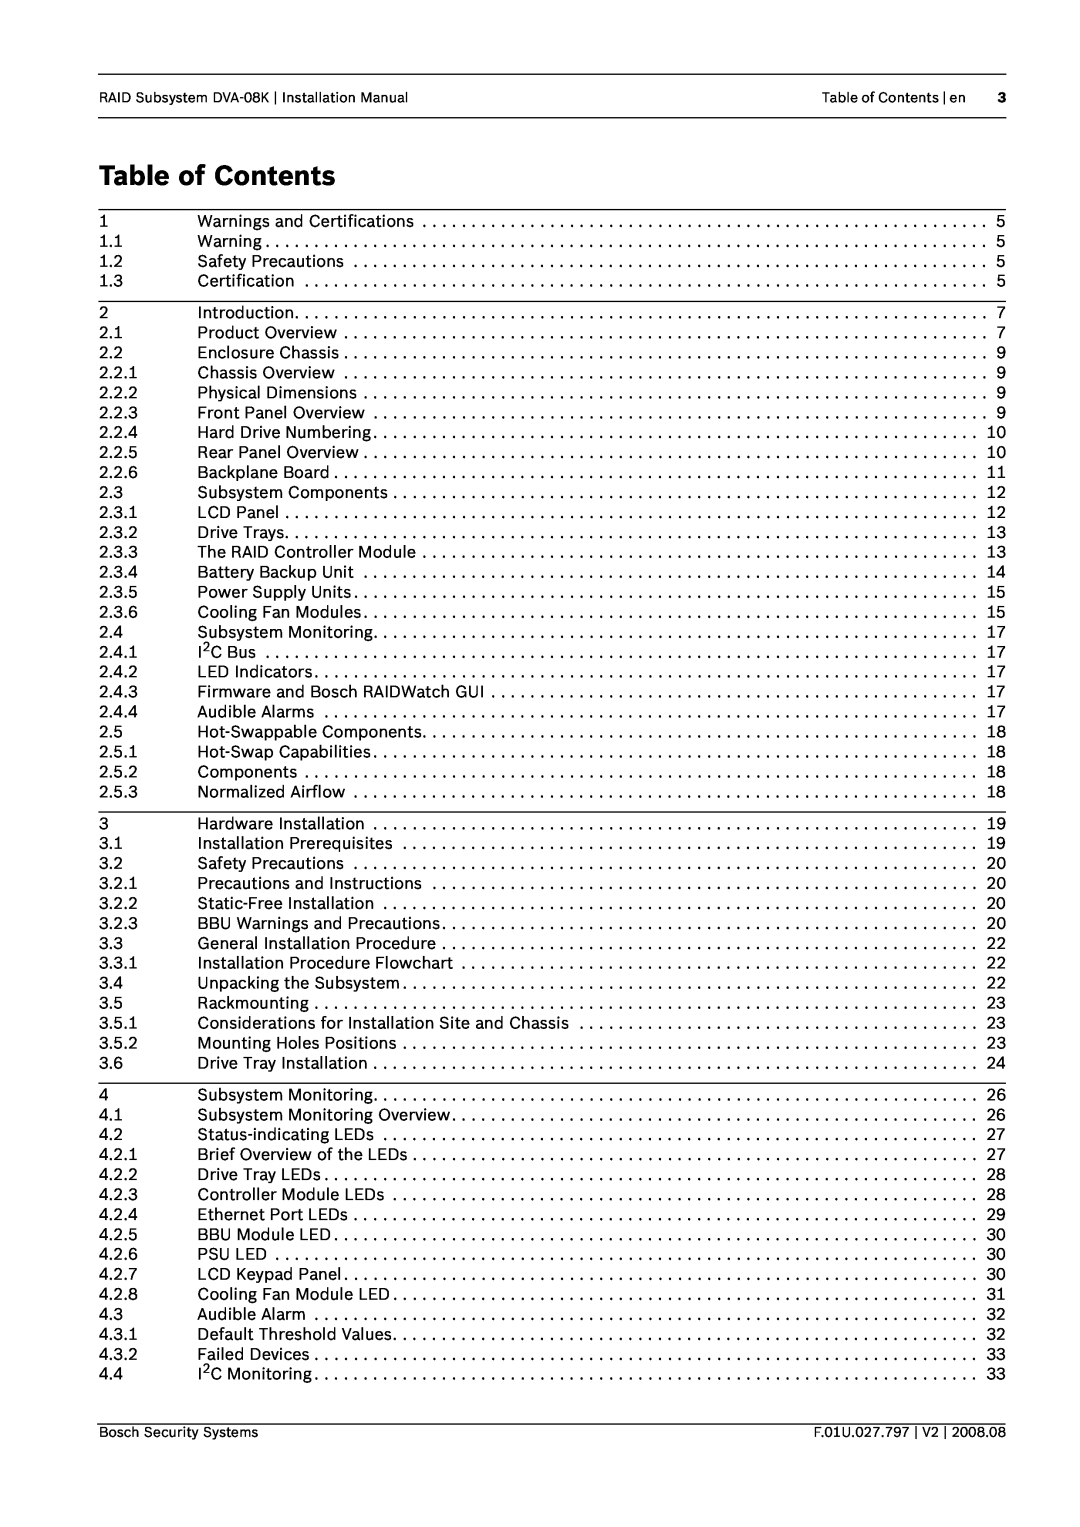 Bosch Appliances manual RAID Subsystem DVA-08K Installation Manual, Table of Contents en, Bosch Security Systems 